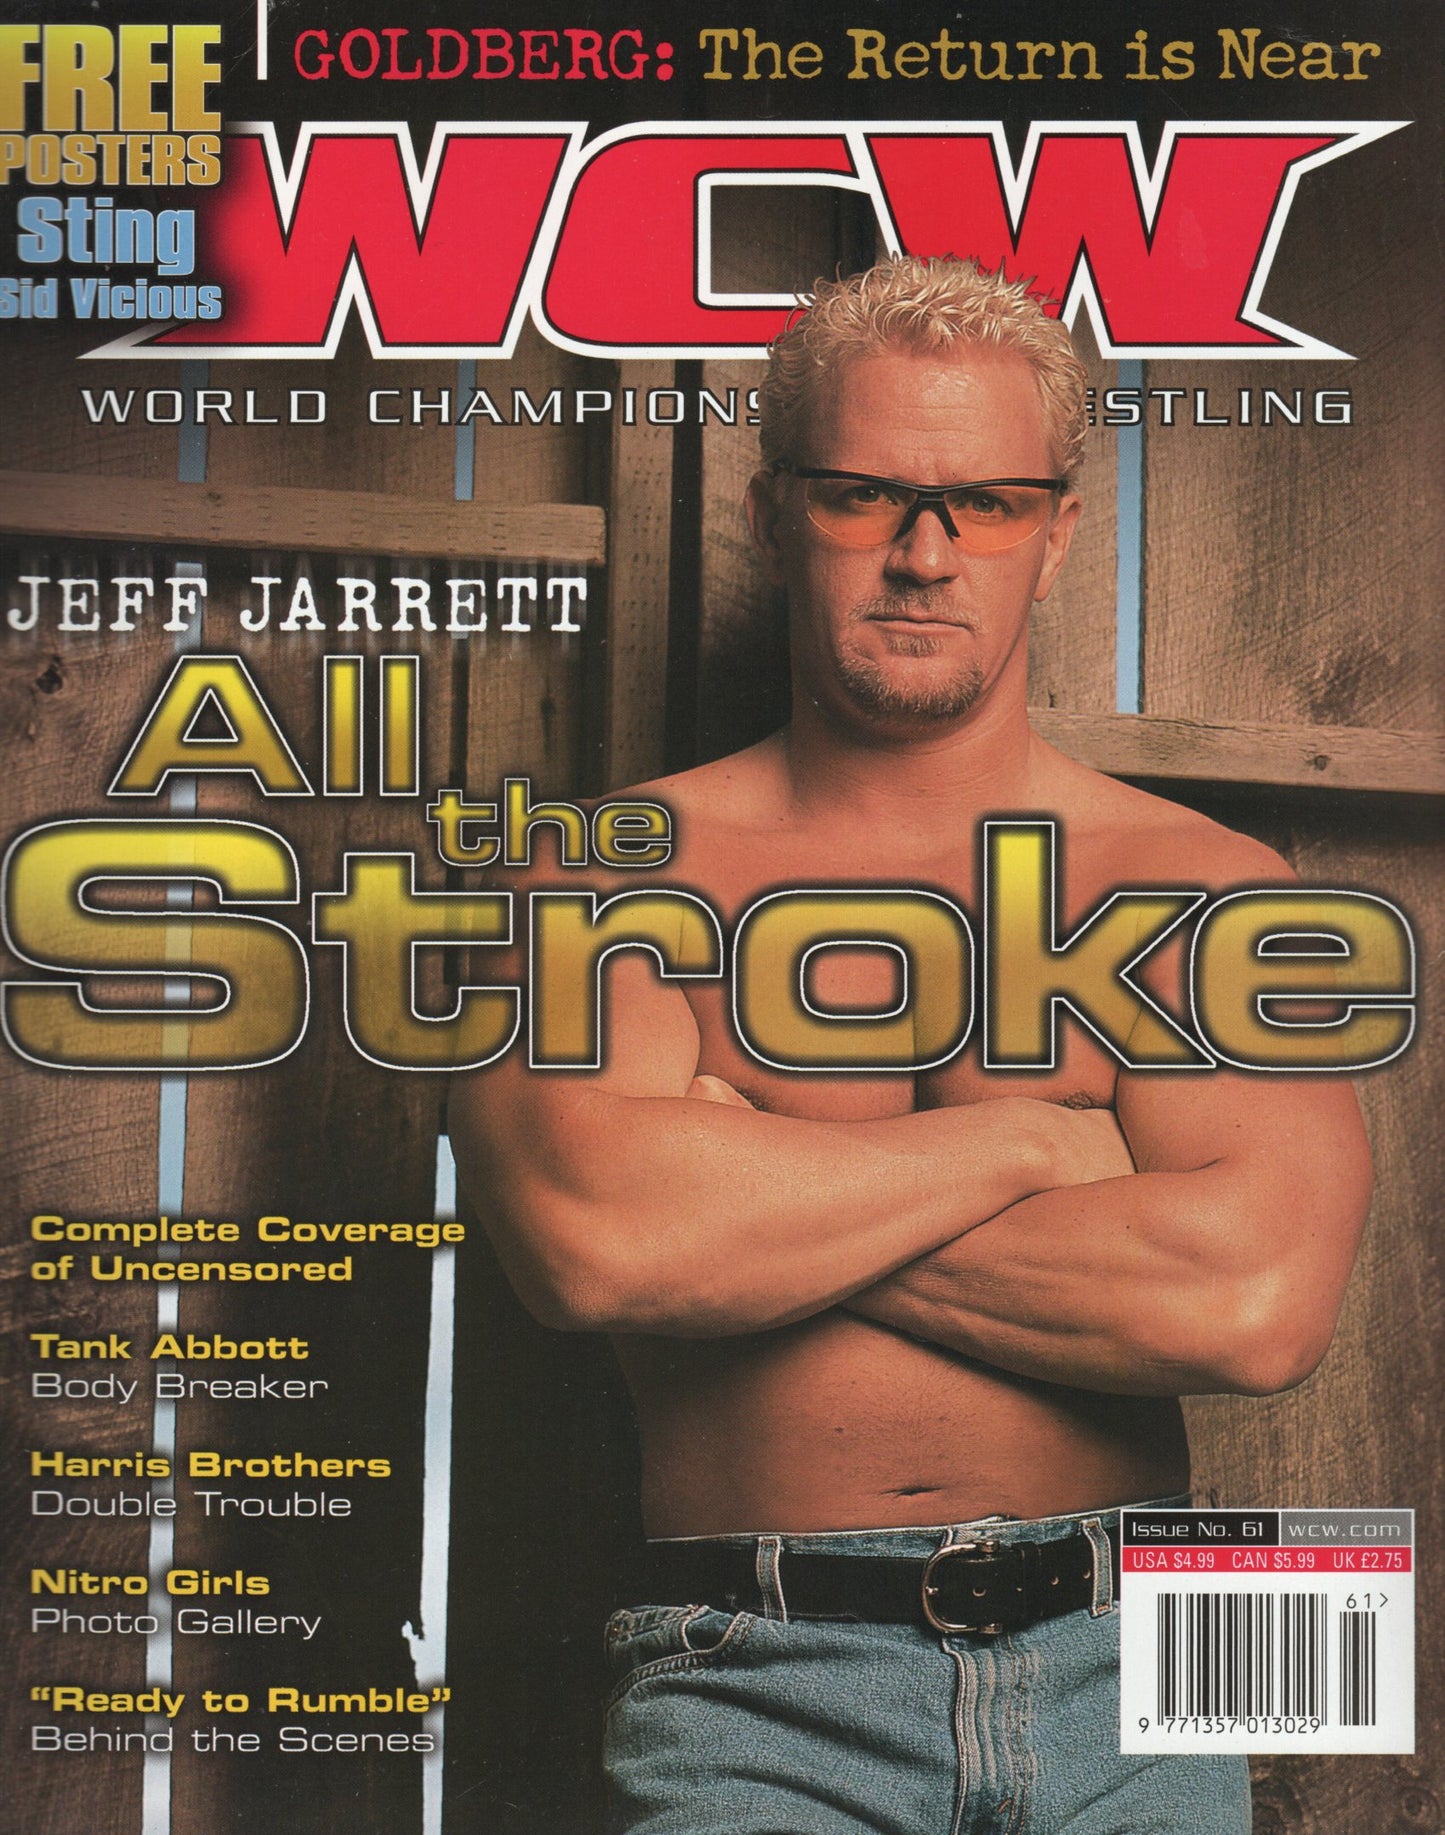 WCW Magazine May 2000